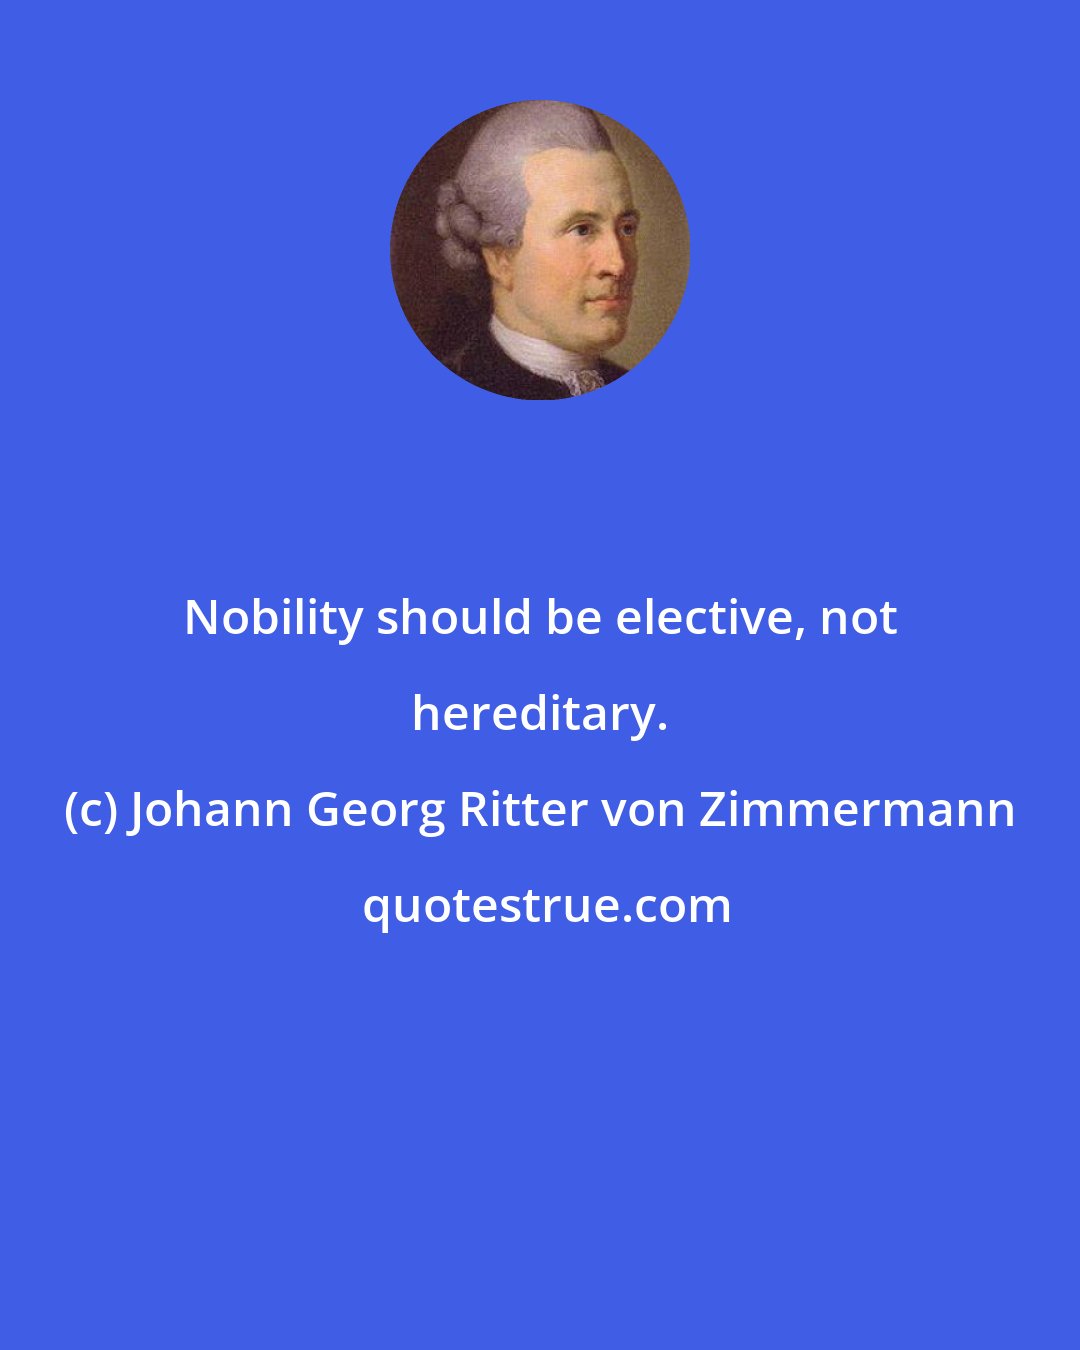 Johann Georg Ritter von Zimmermann: Nobility should be elective, not hereditary.